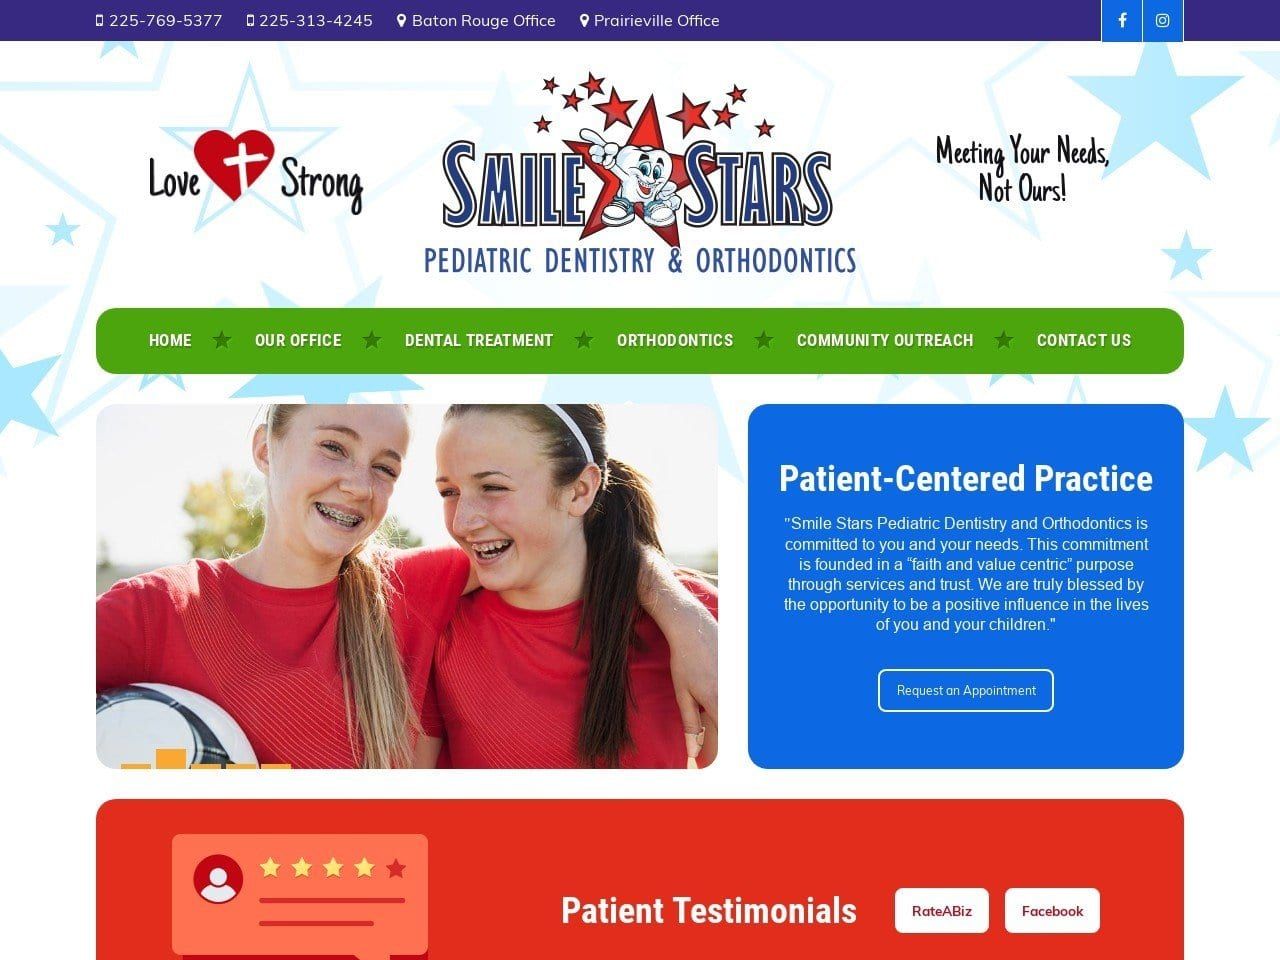 Smile Stars Pediatric Dentist Website Screenshot from smilestars.com